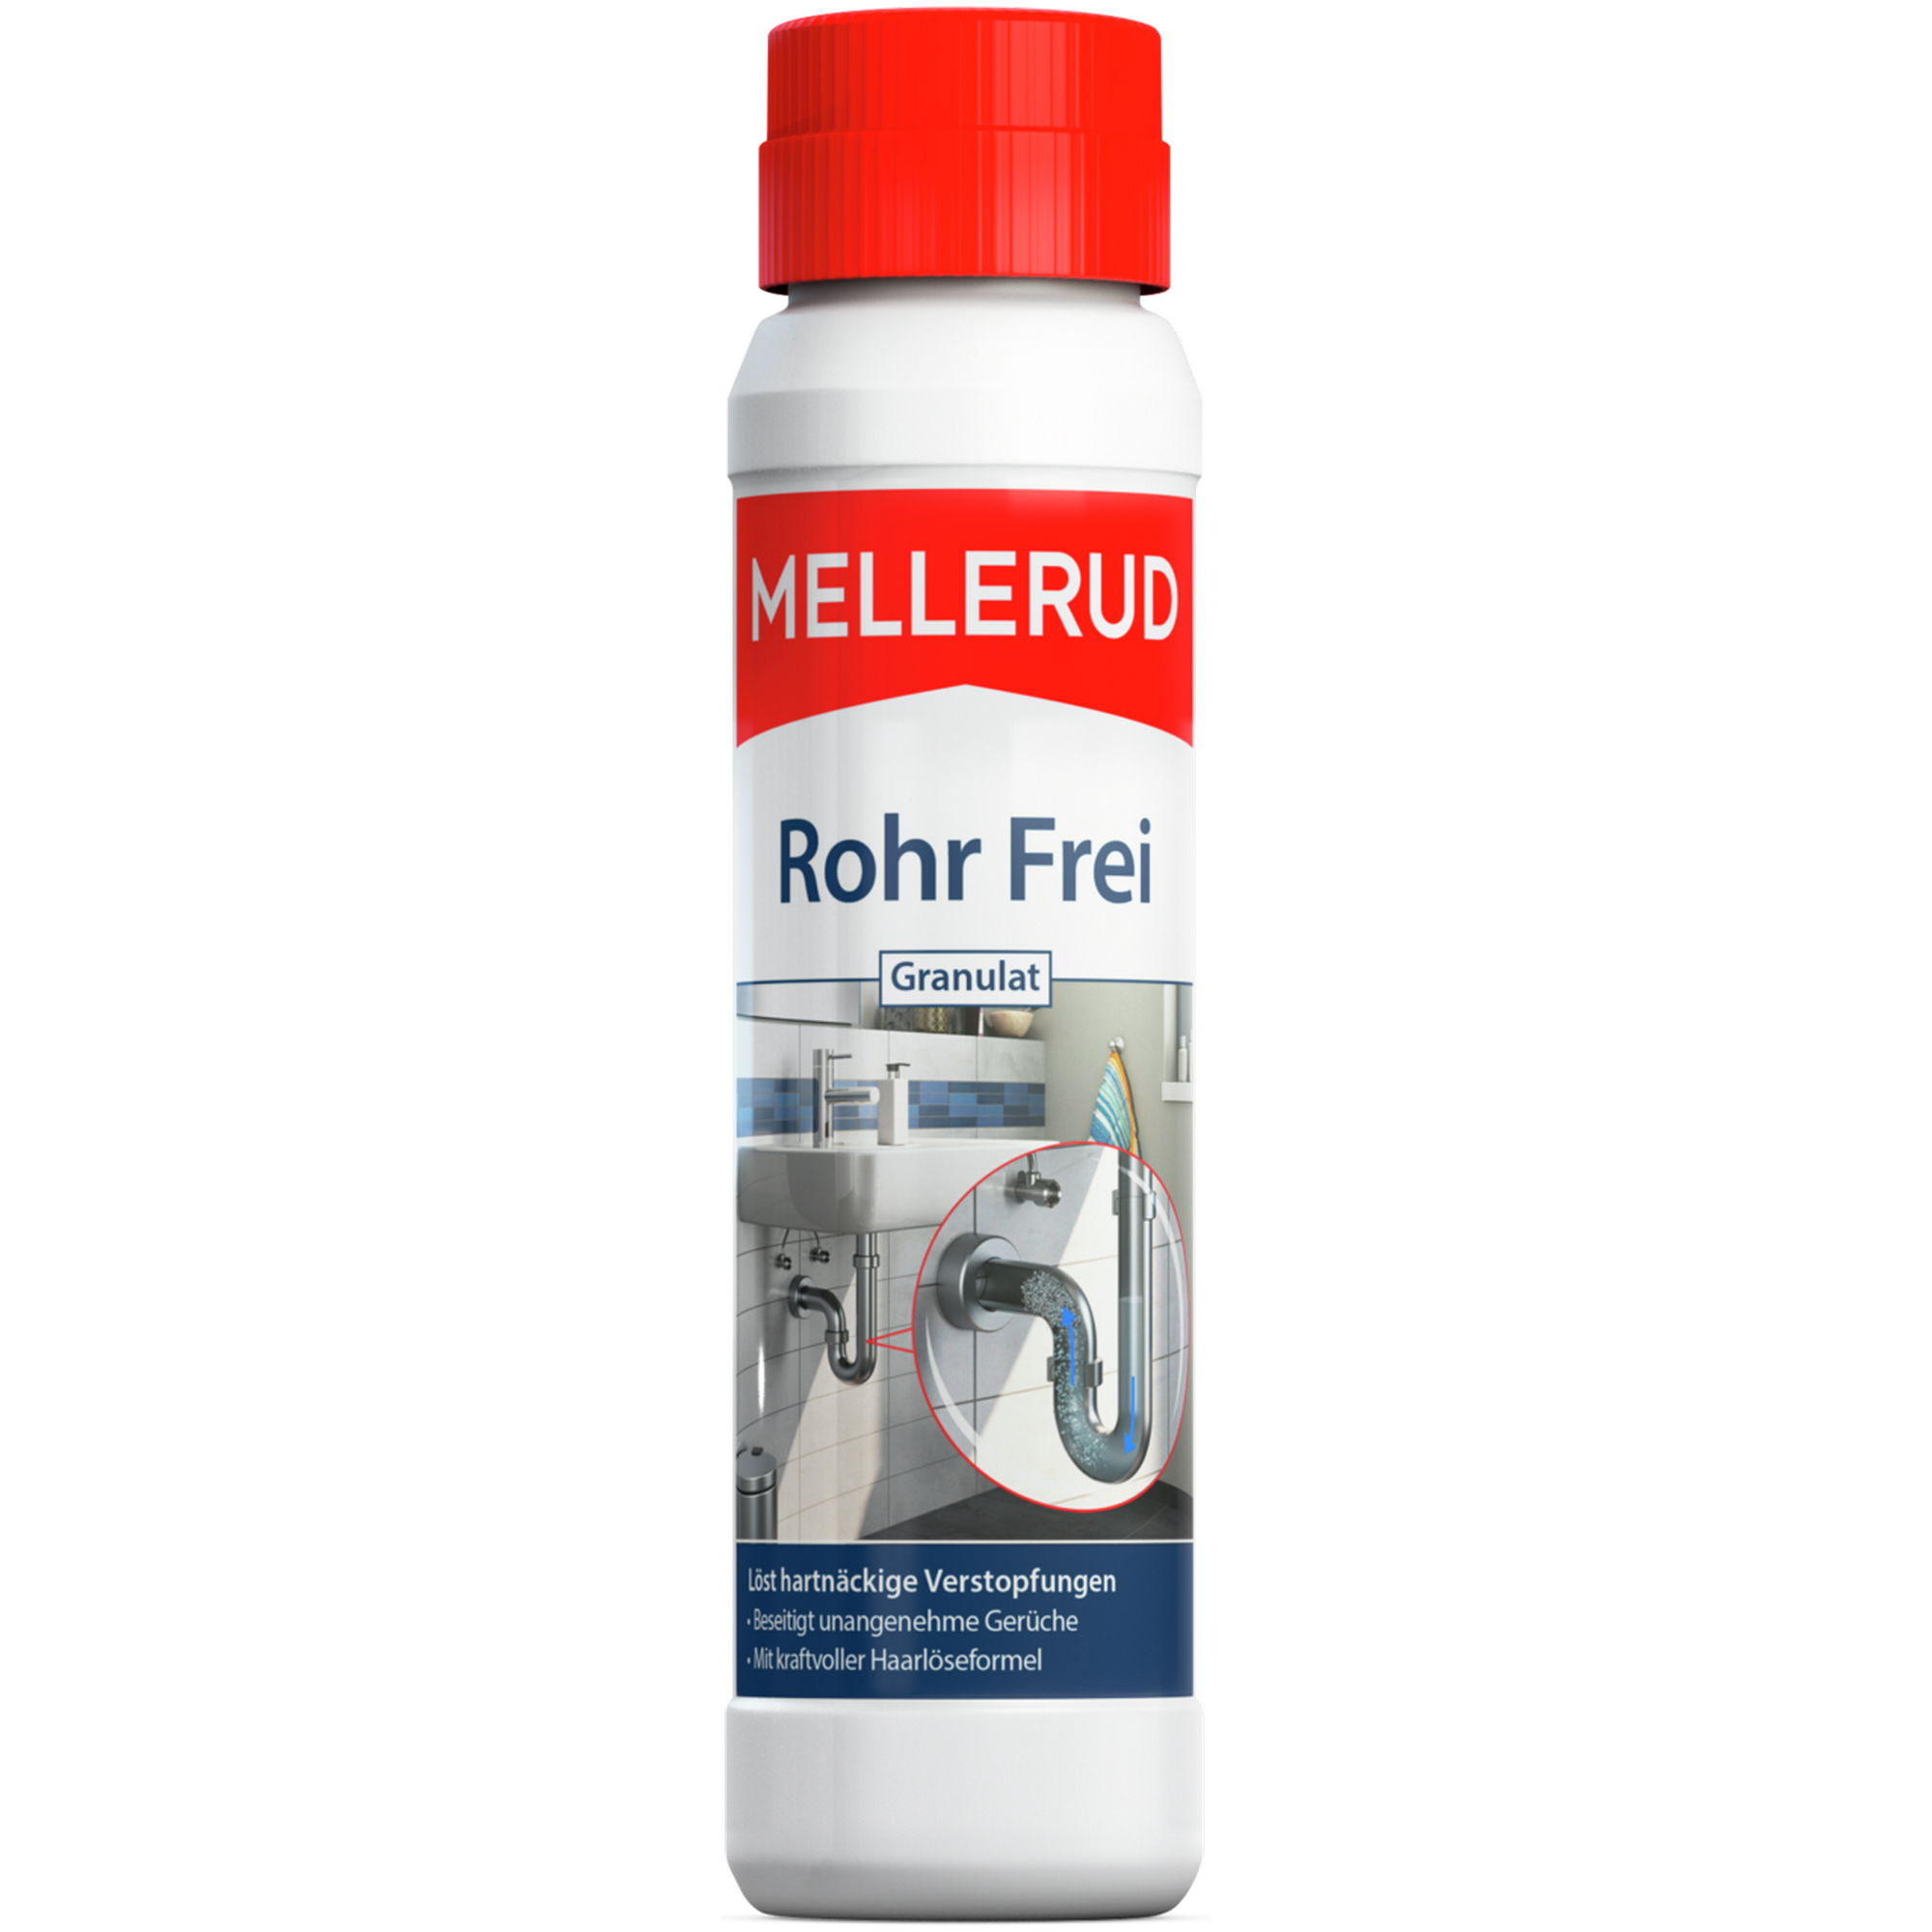 Granulat "Rohr Frei" 0,6 kg + product picture